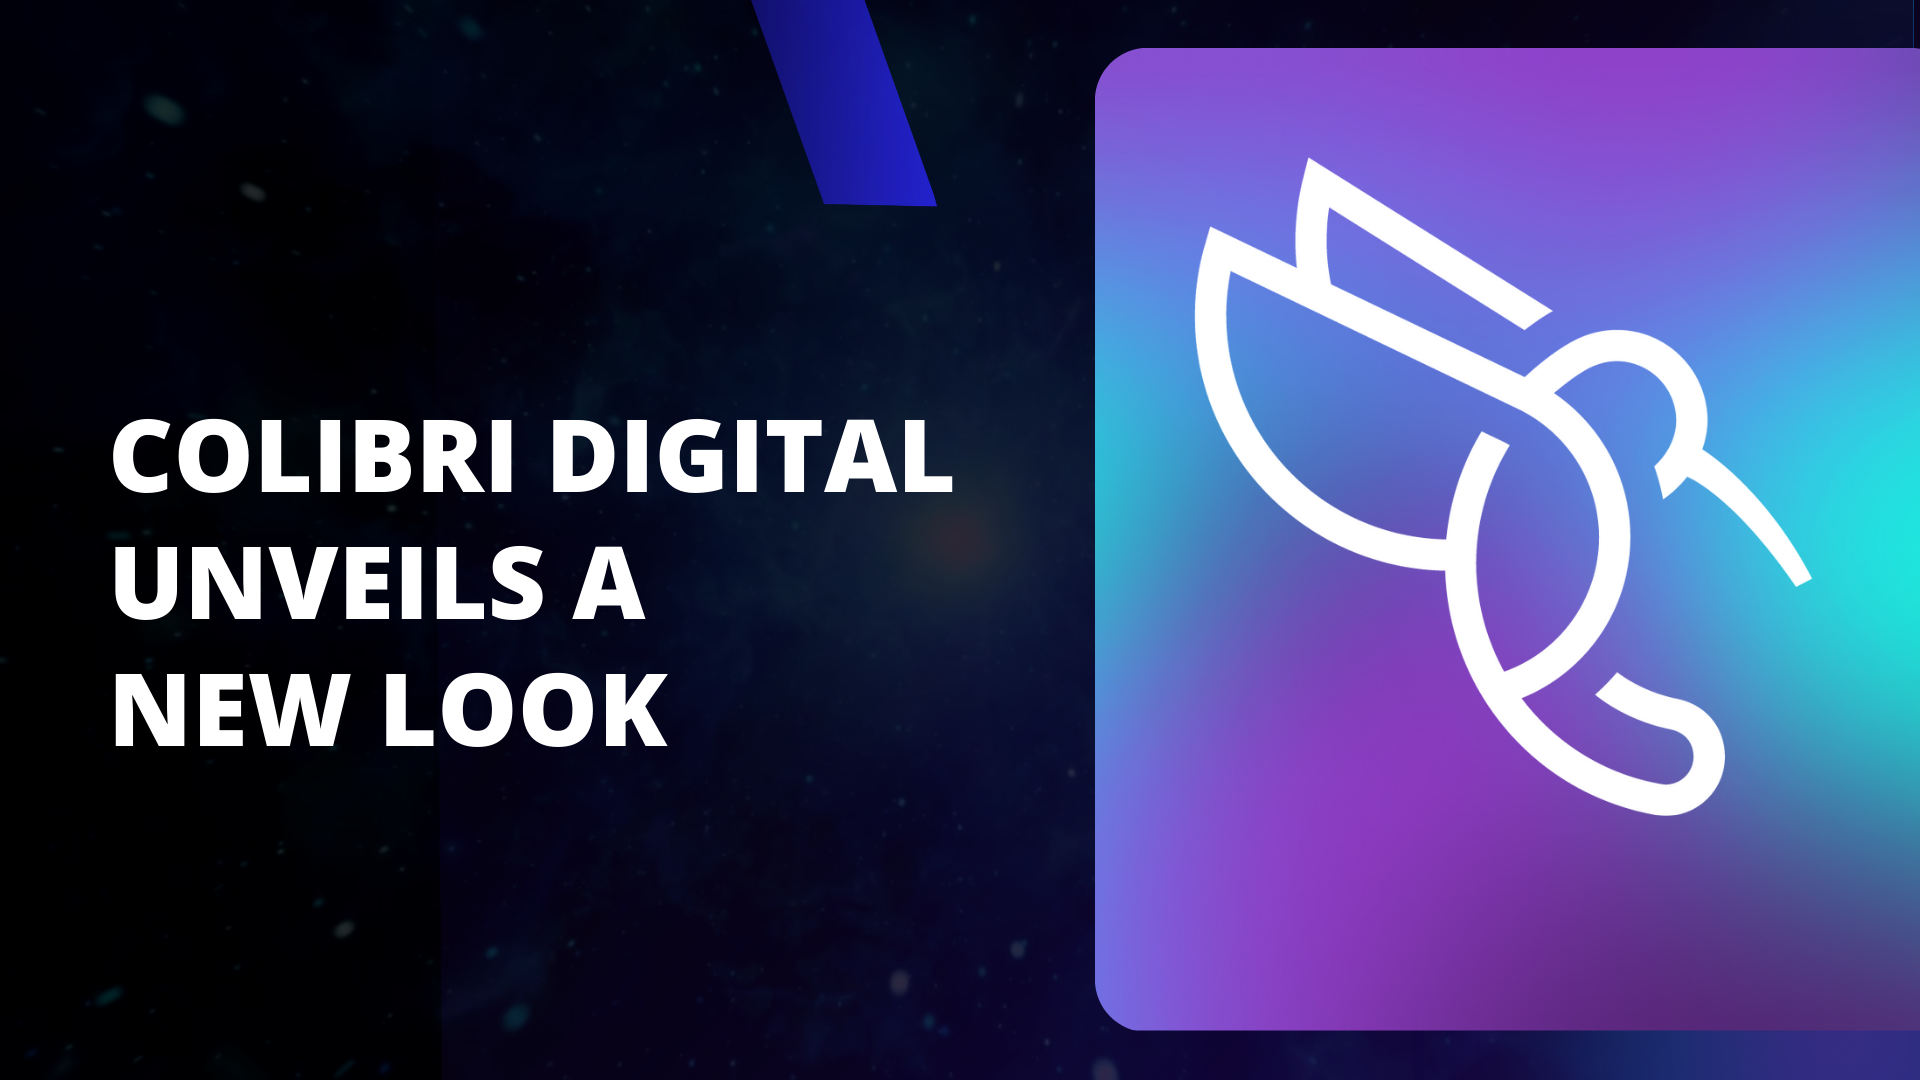 Colibri Digital unveils a new look - Main header image